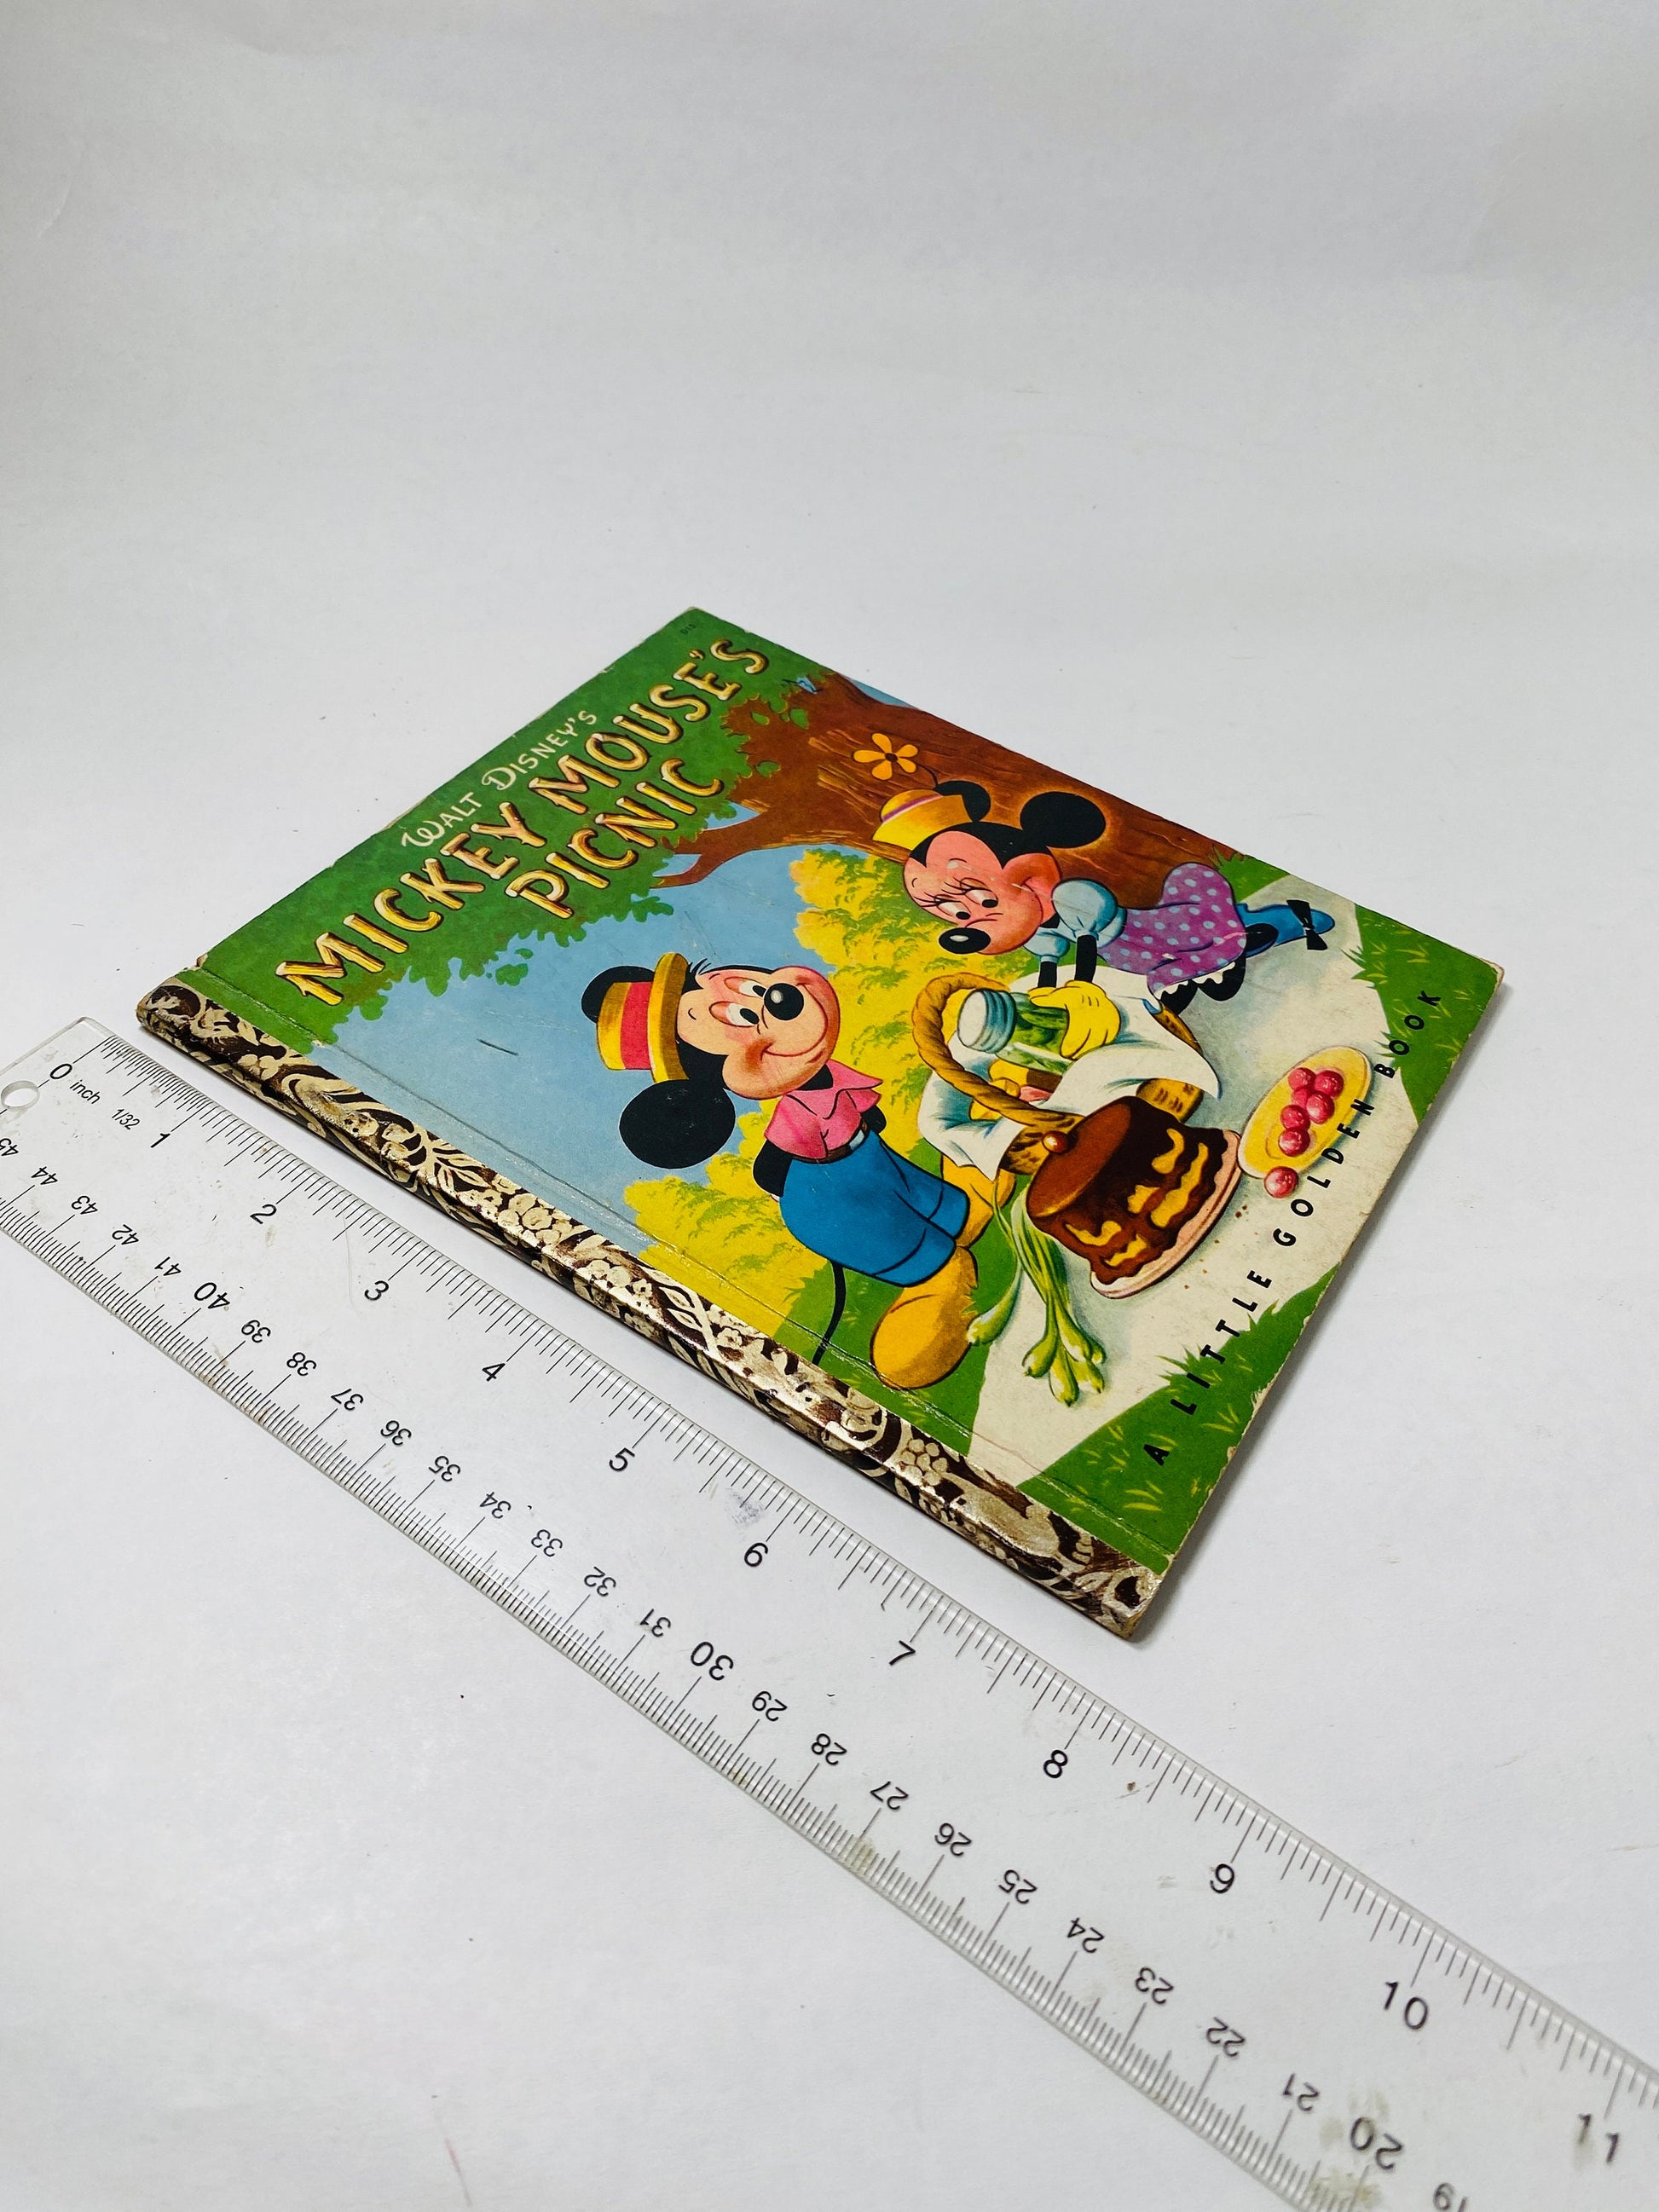 1950 Mickey Mouse's Picnic Little Golden Book Vintage hardback children's book Walt Disney Studio.